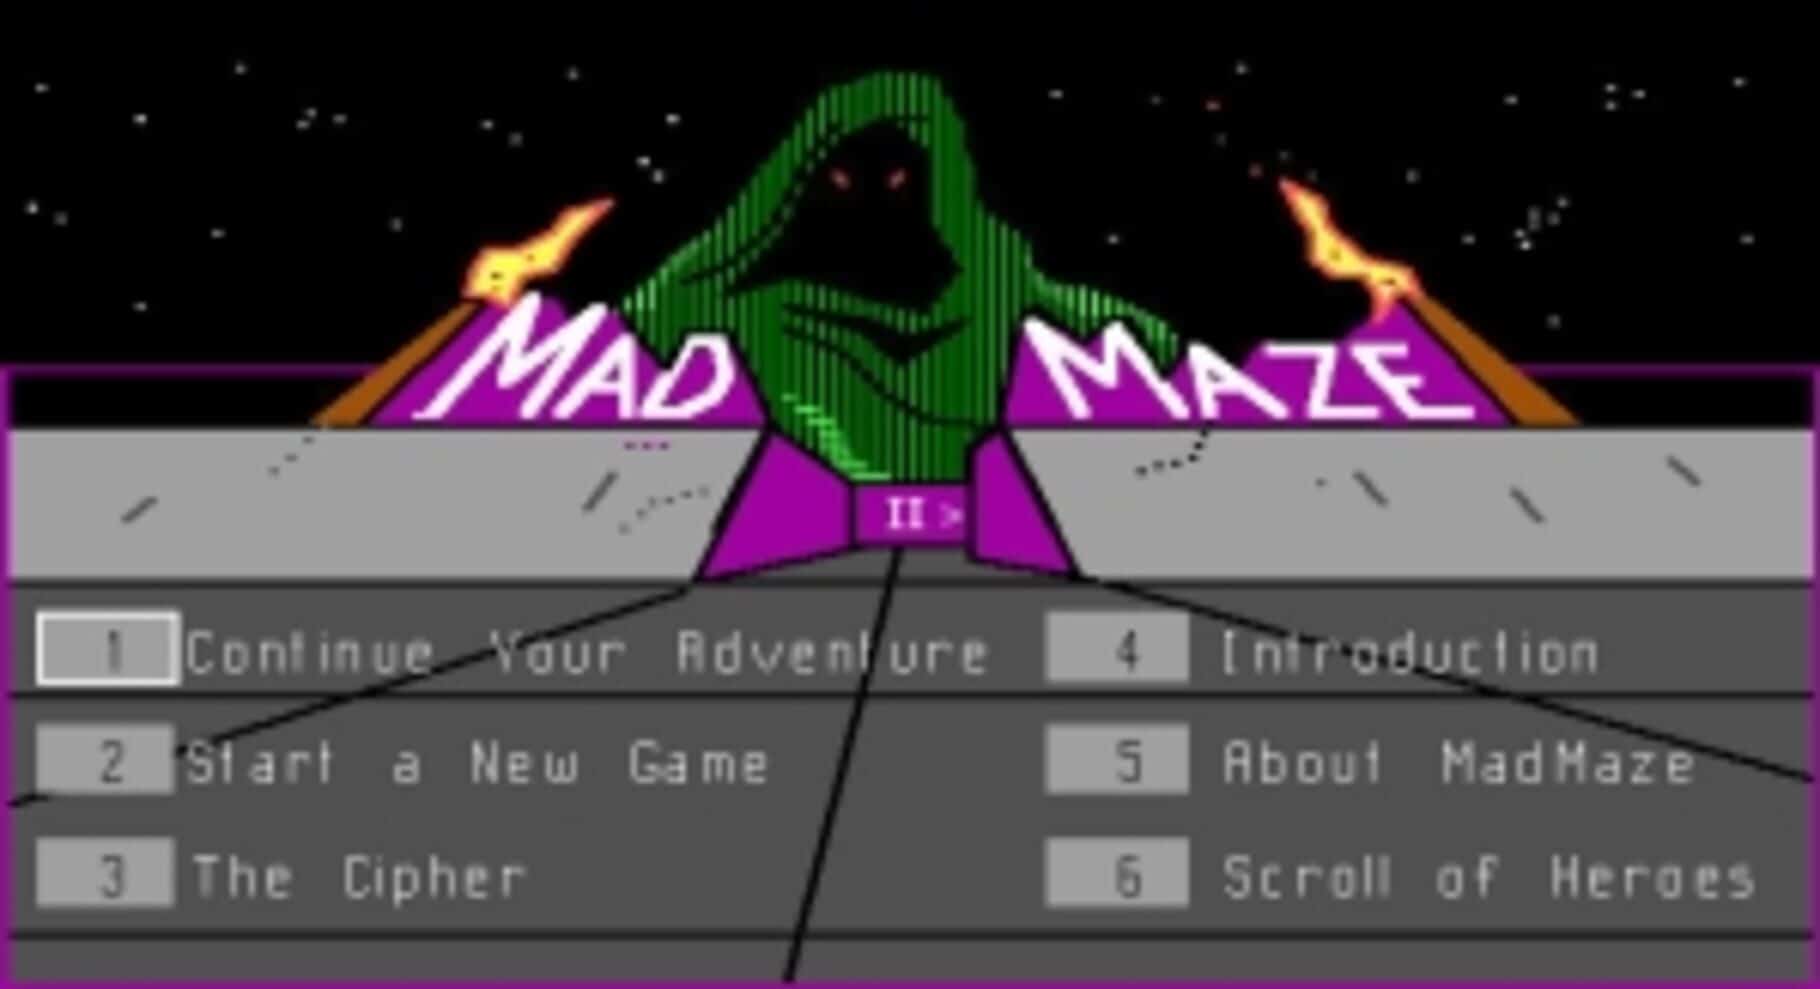 Mad Maze